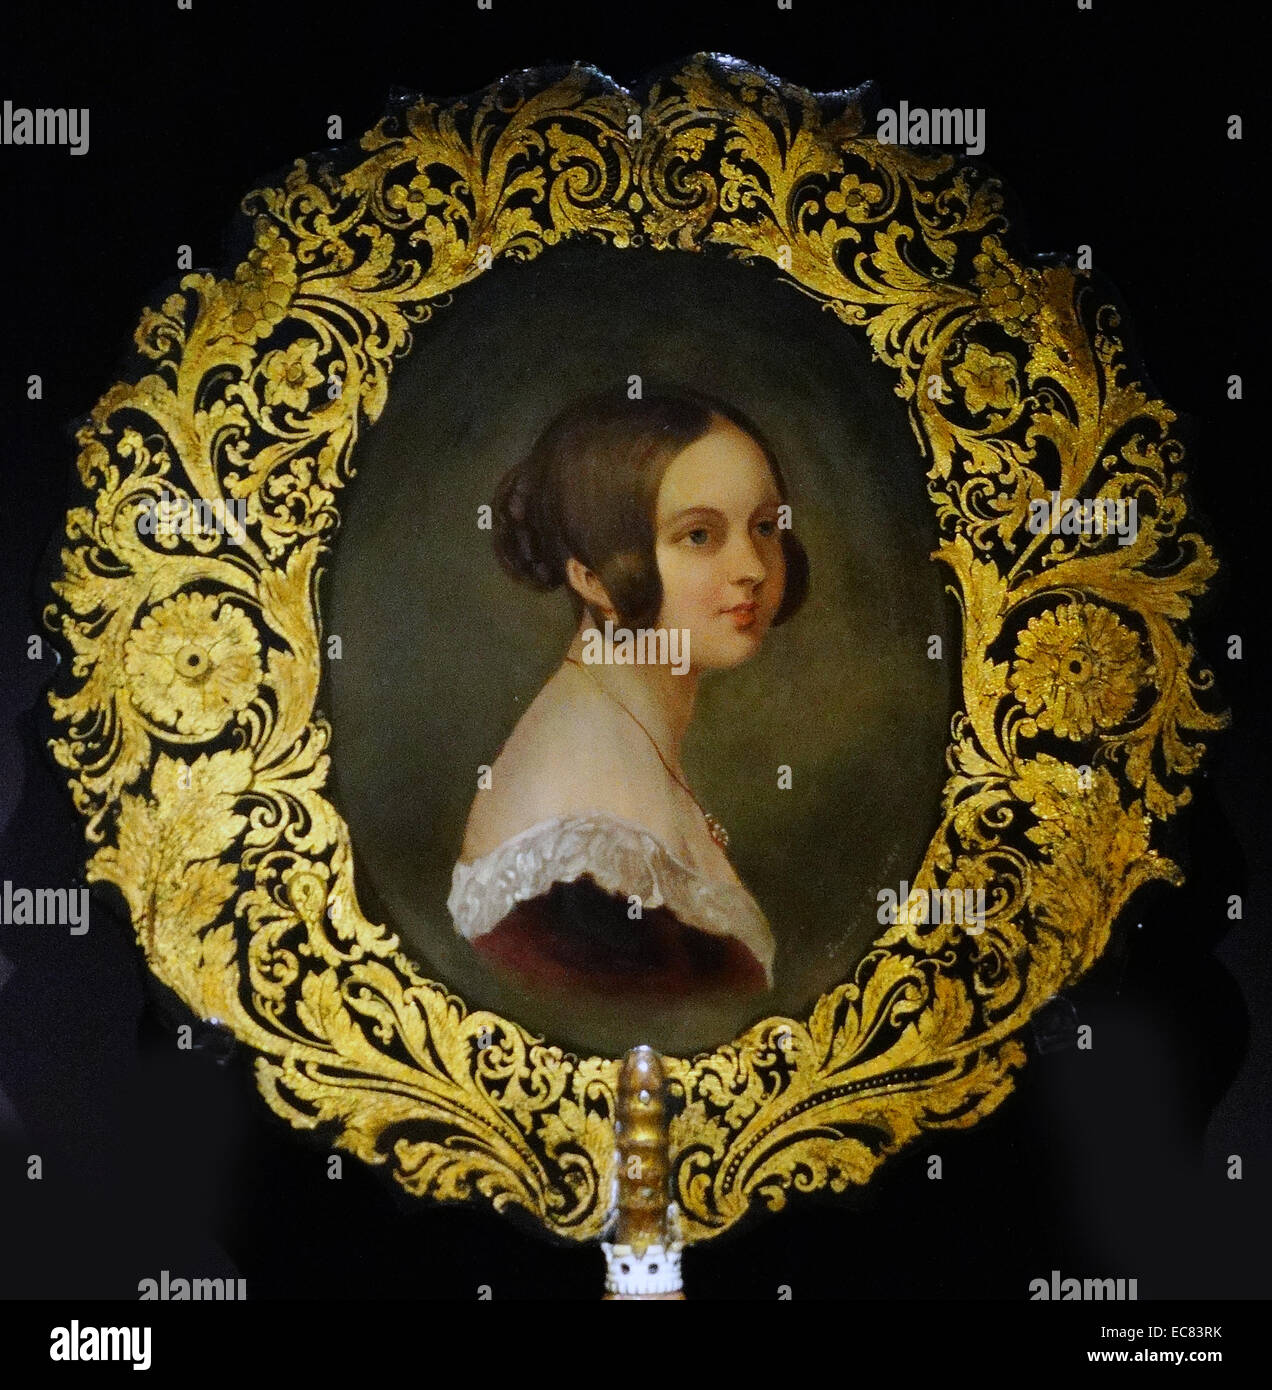 Papier Mache face screens featuring Queen Victoria; Jenners & Betteridge; around 1840. Stock Photo